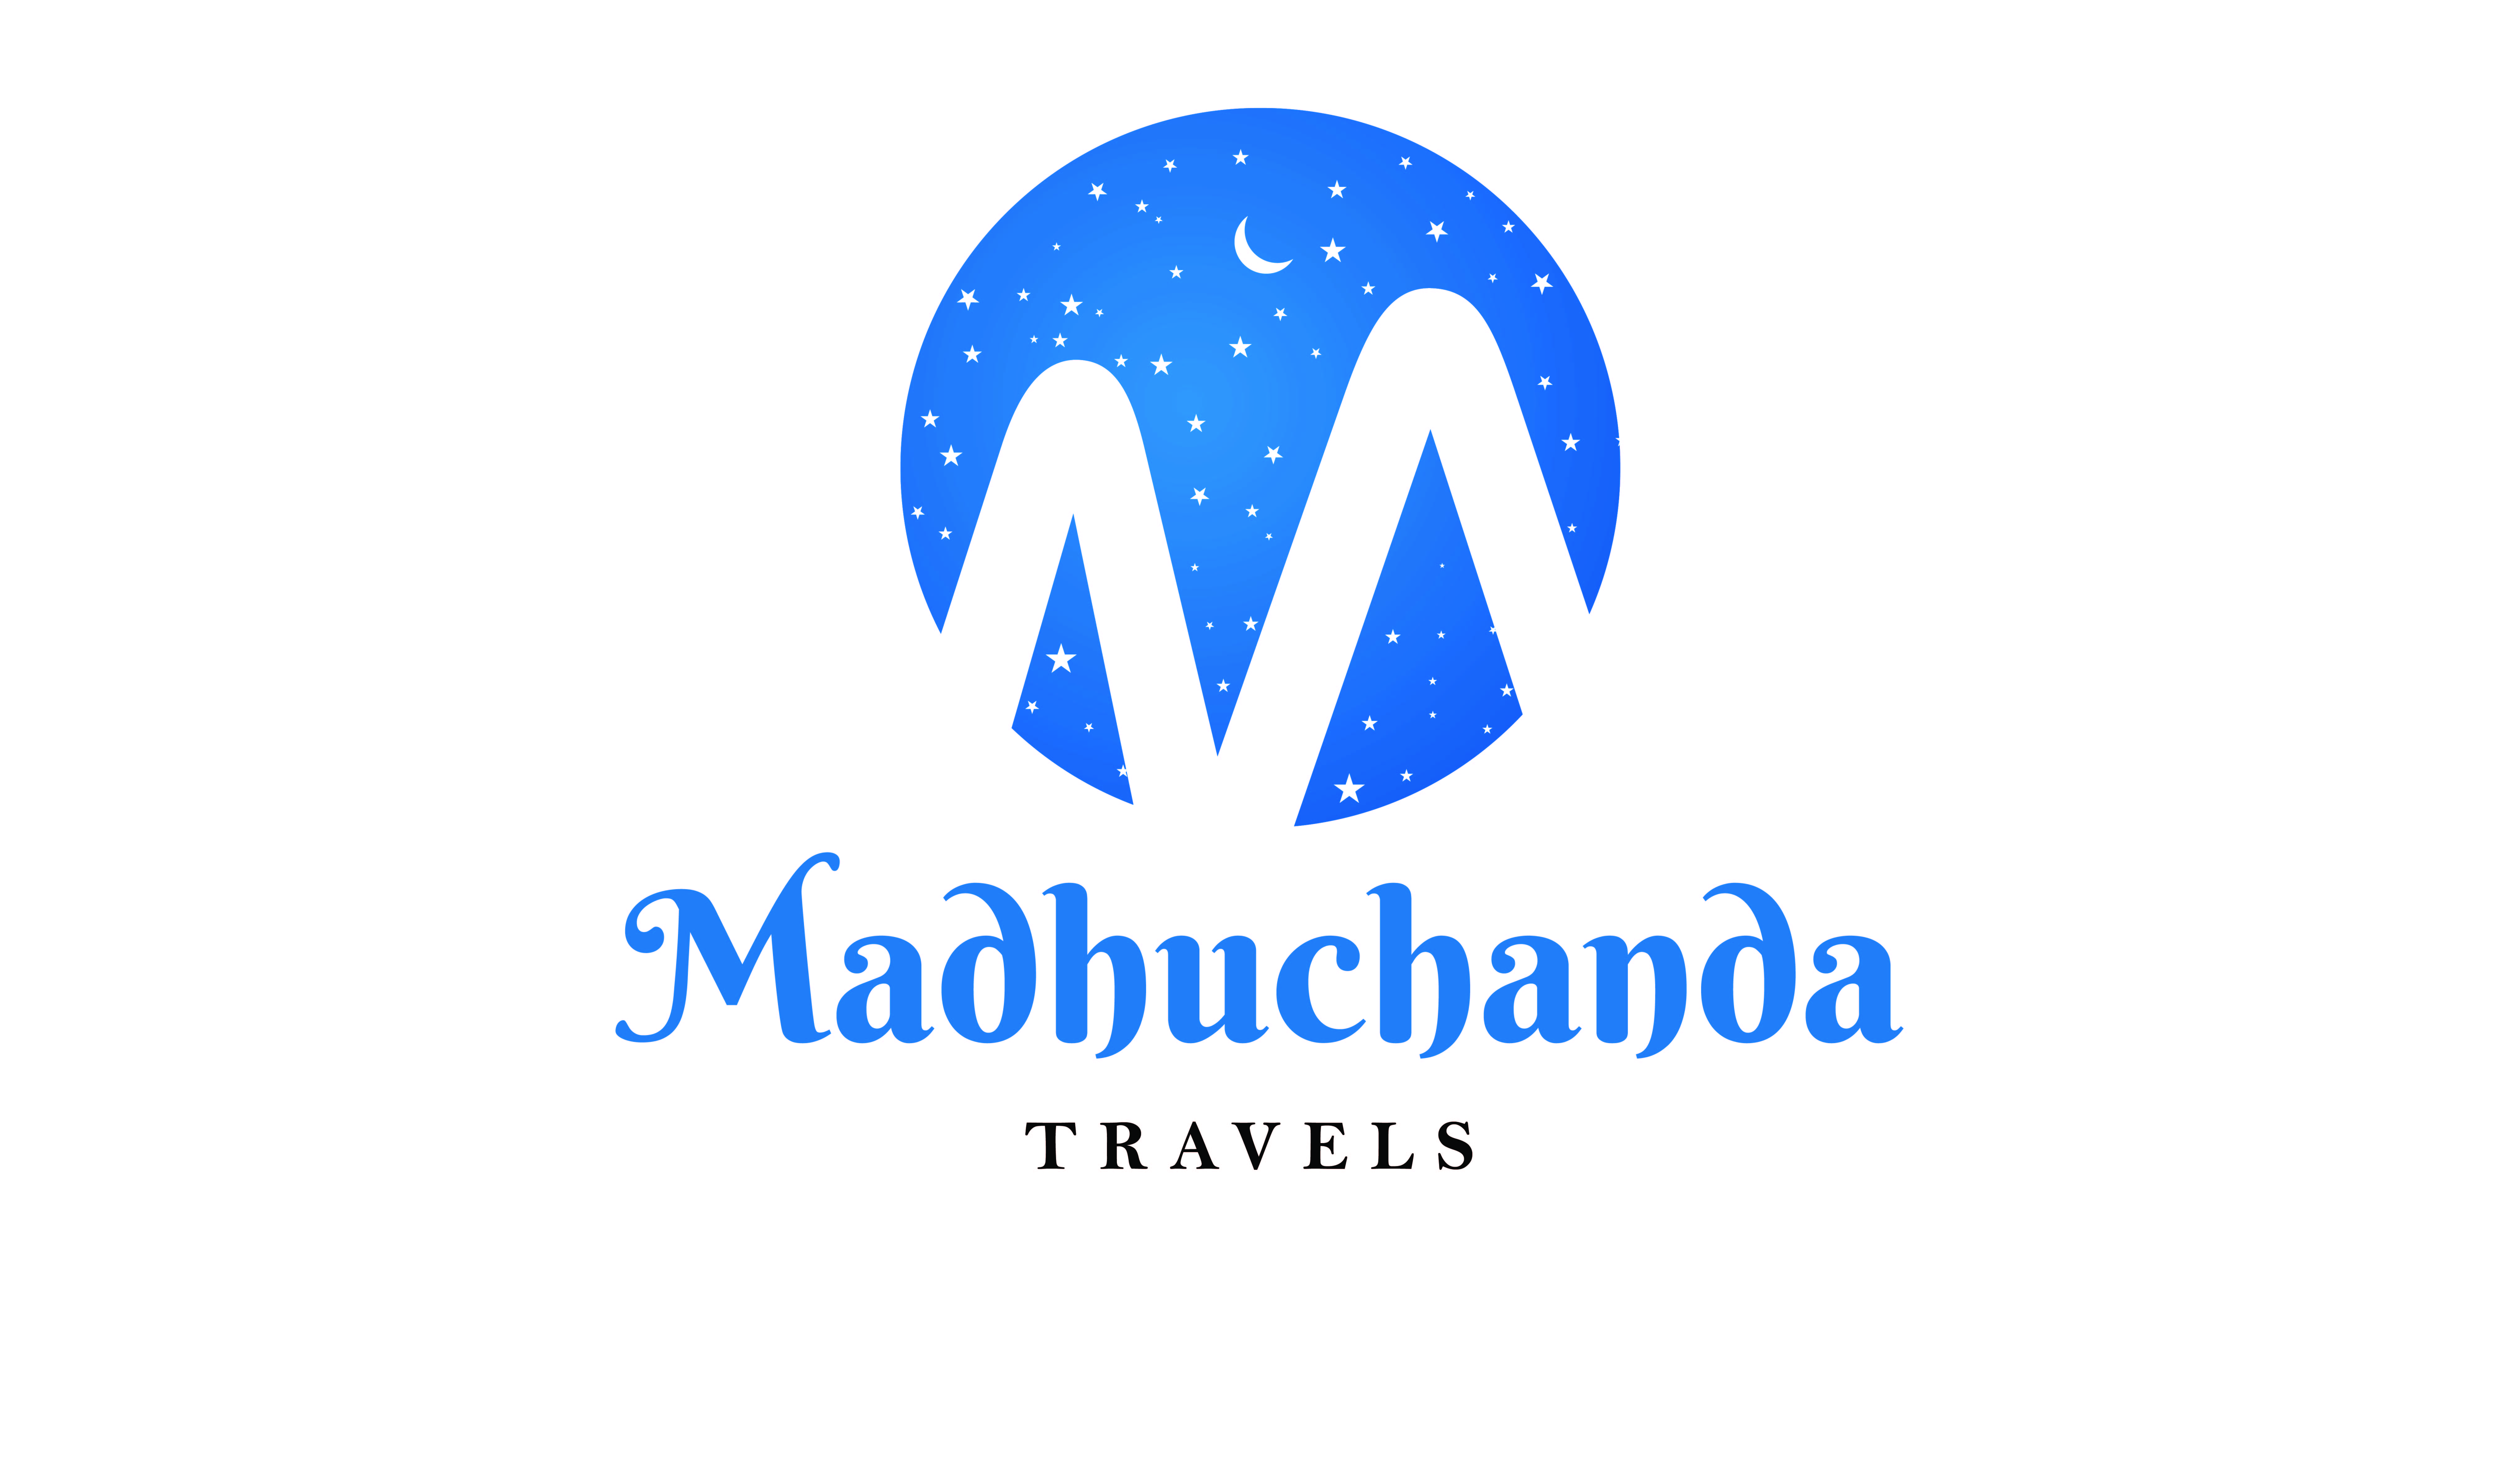 Madhuchanda Travels